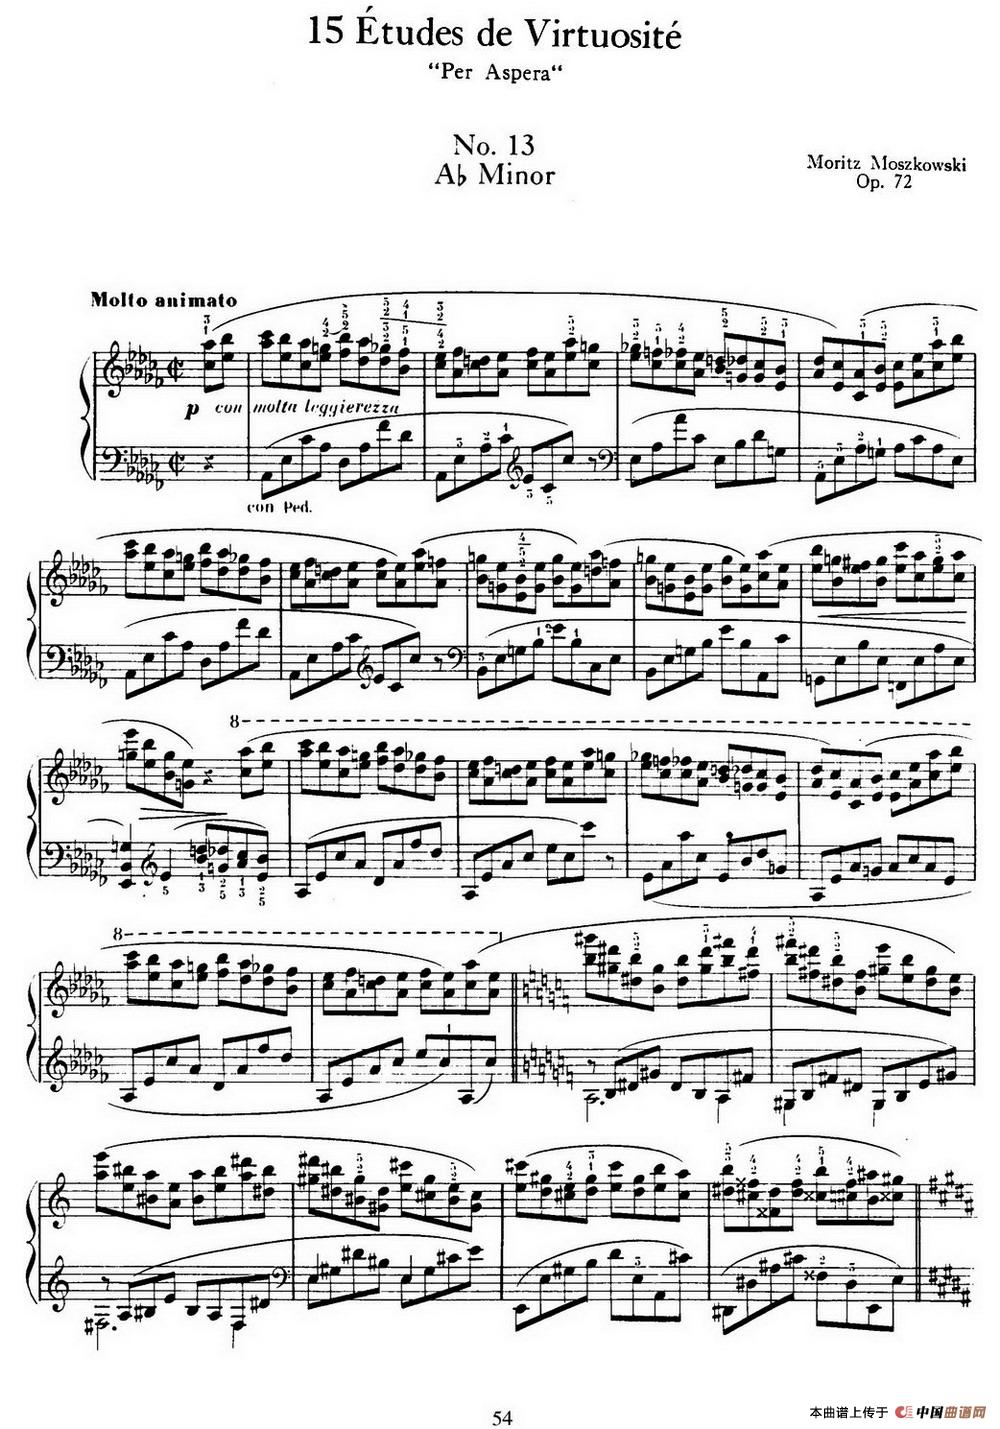 15 Etudes de Virtuosité Op.72 No.13（十五首钢琴练习曲之十三）(1)_054-.jpg